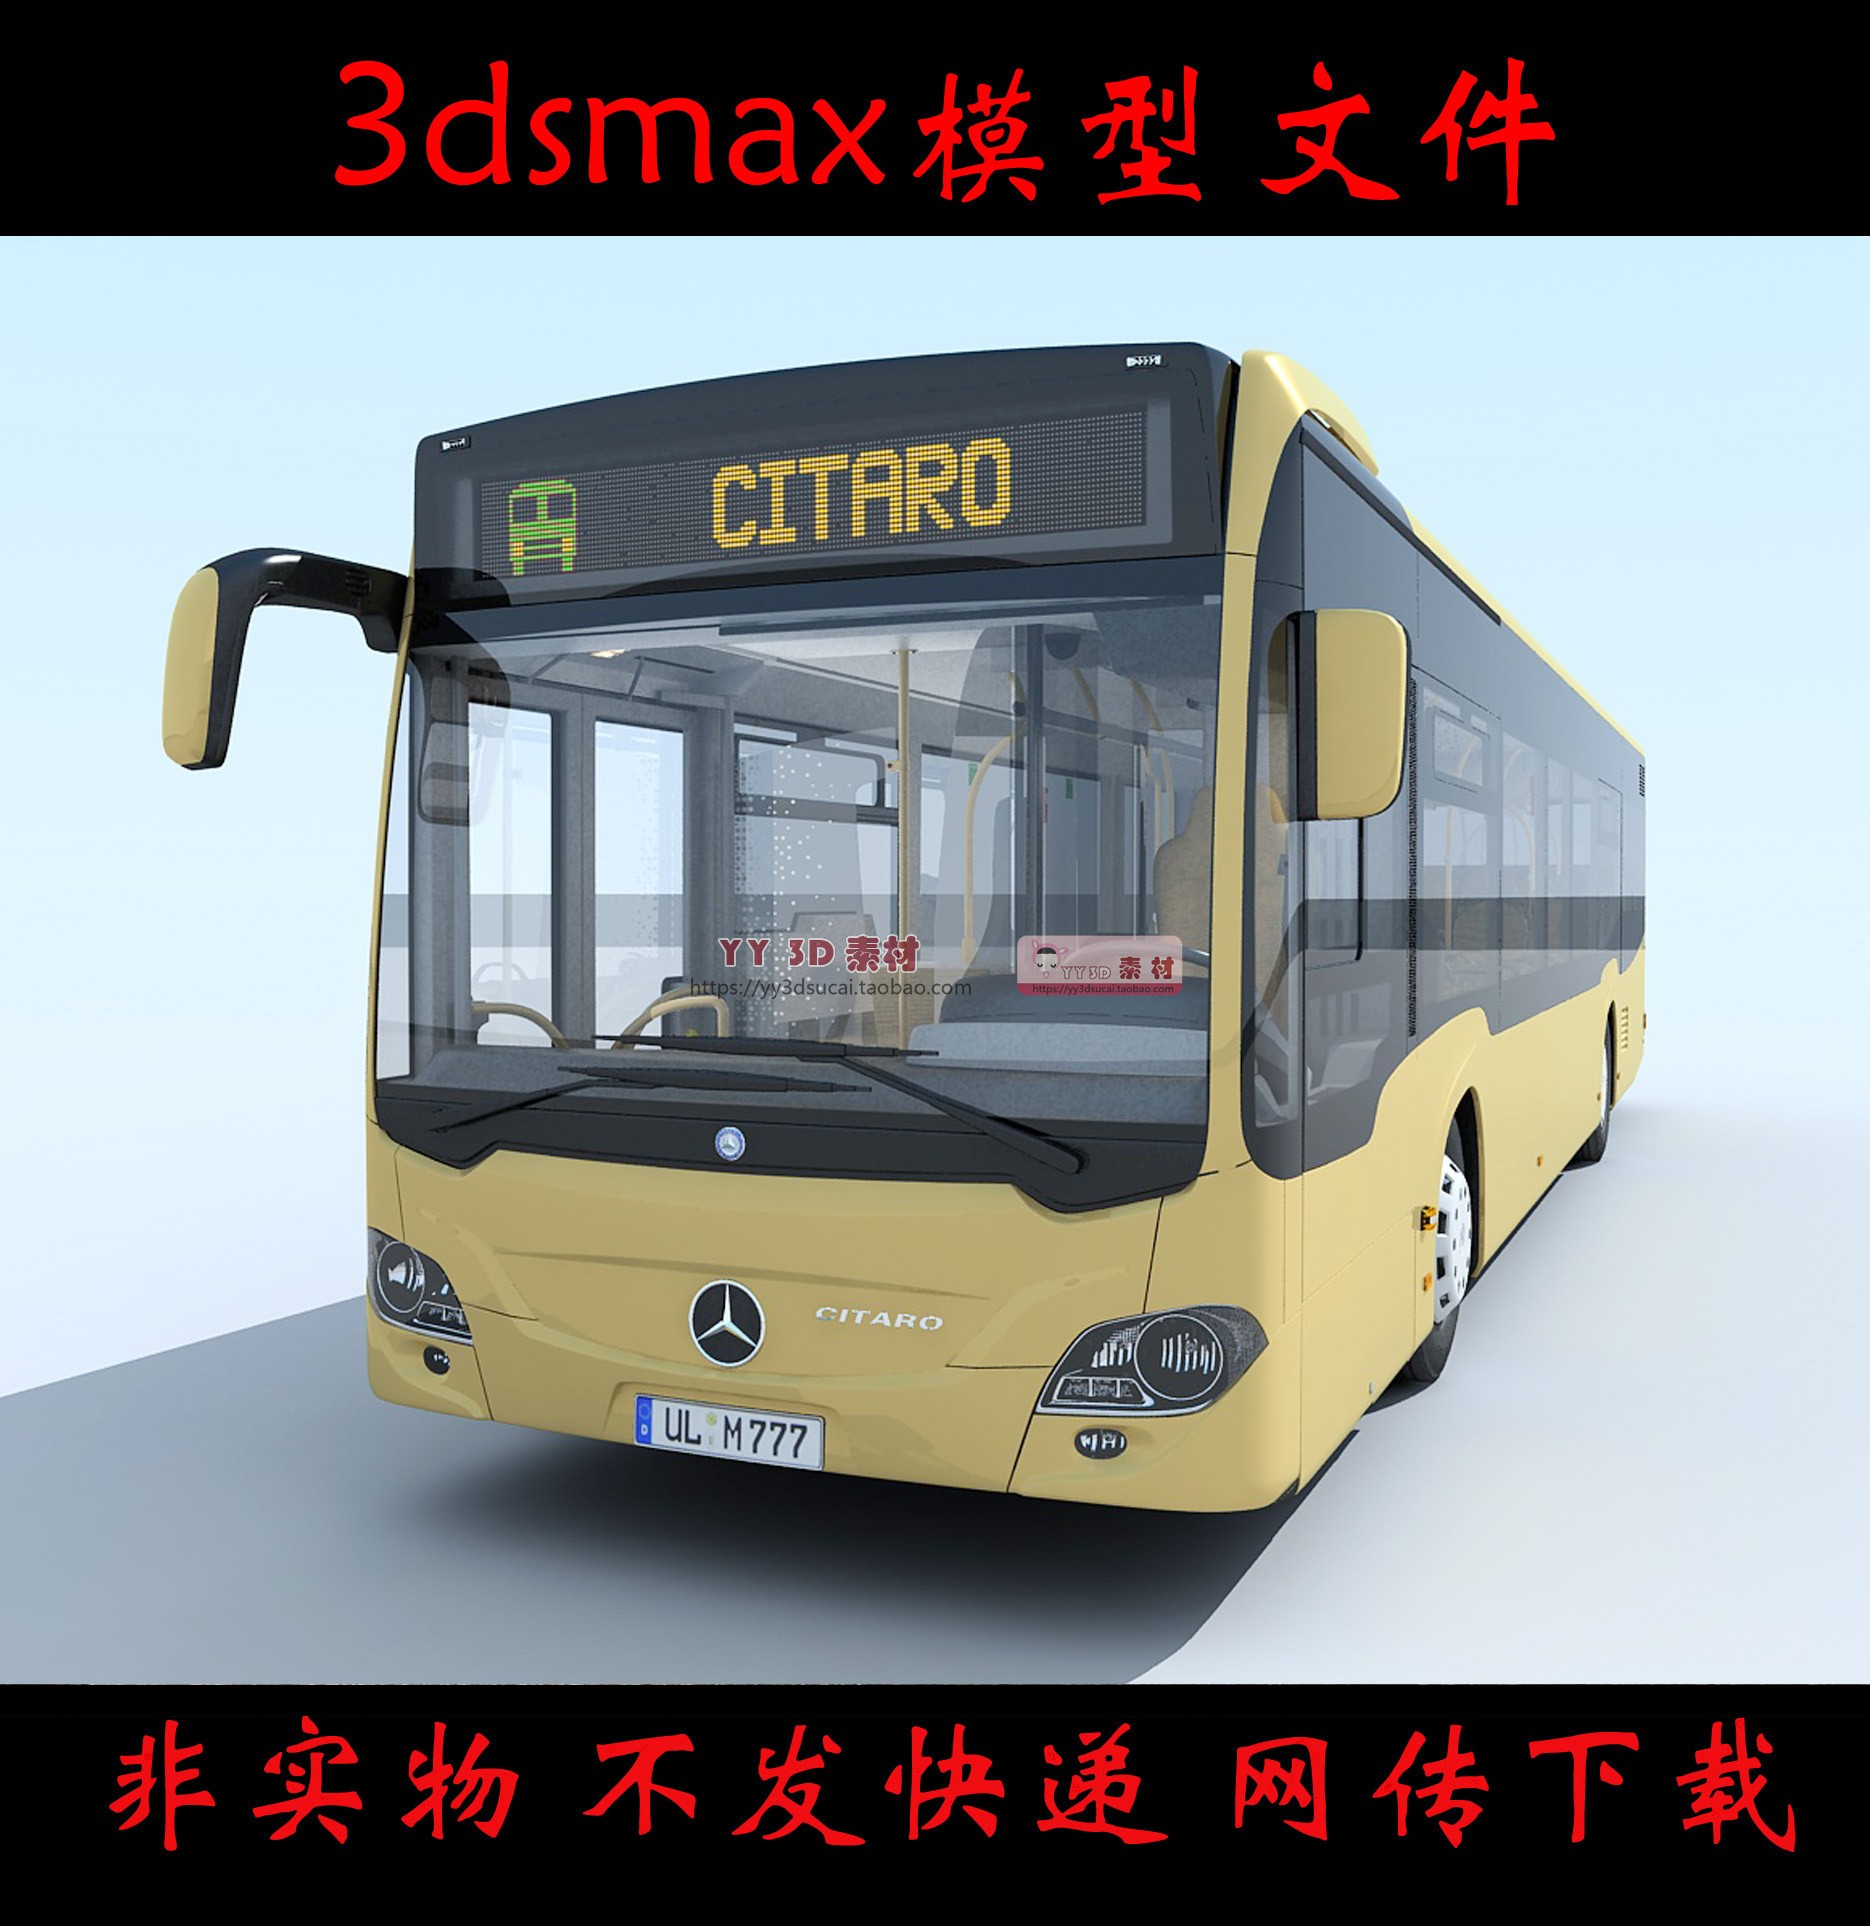 【m0360】精细公交车3dmax模型素材奔驰公交车3d模型奔驰大巴内部